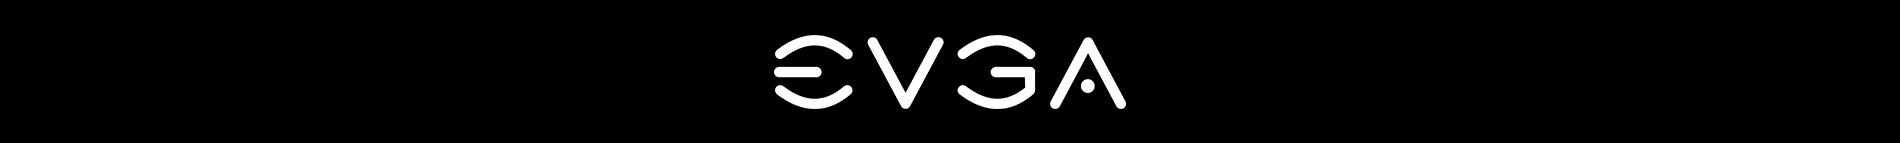 EVGA Bundles 04.23.evga Banner Logo Black